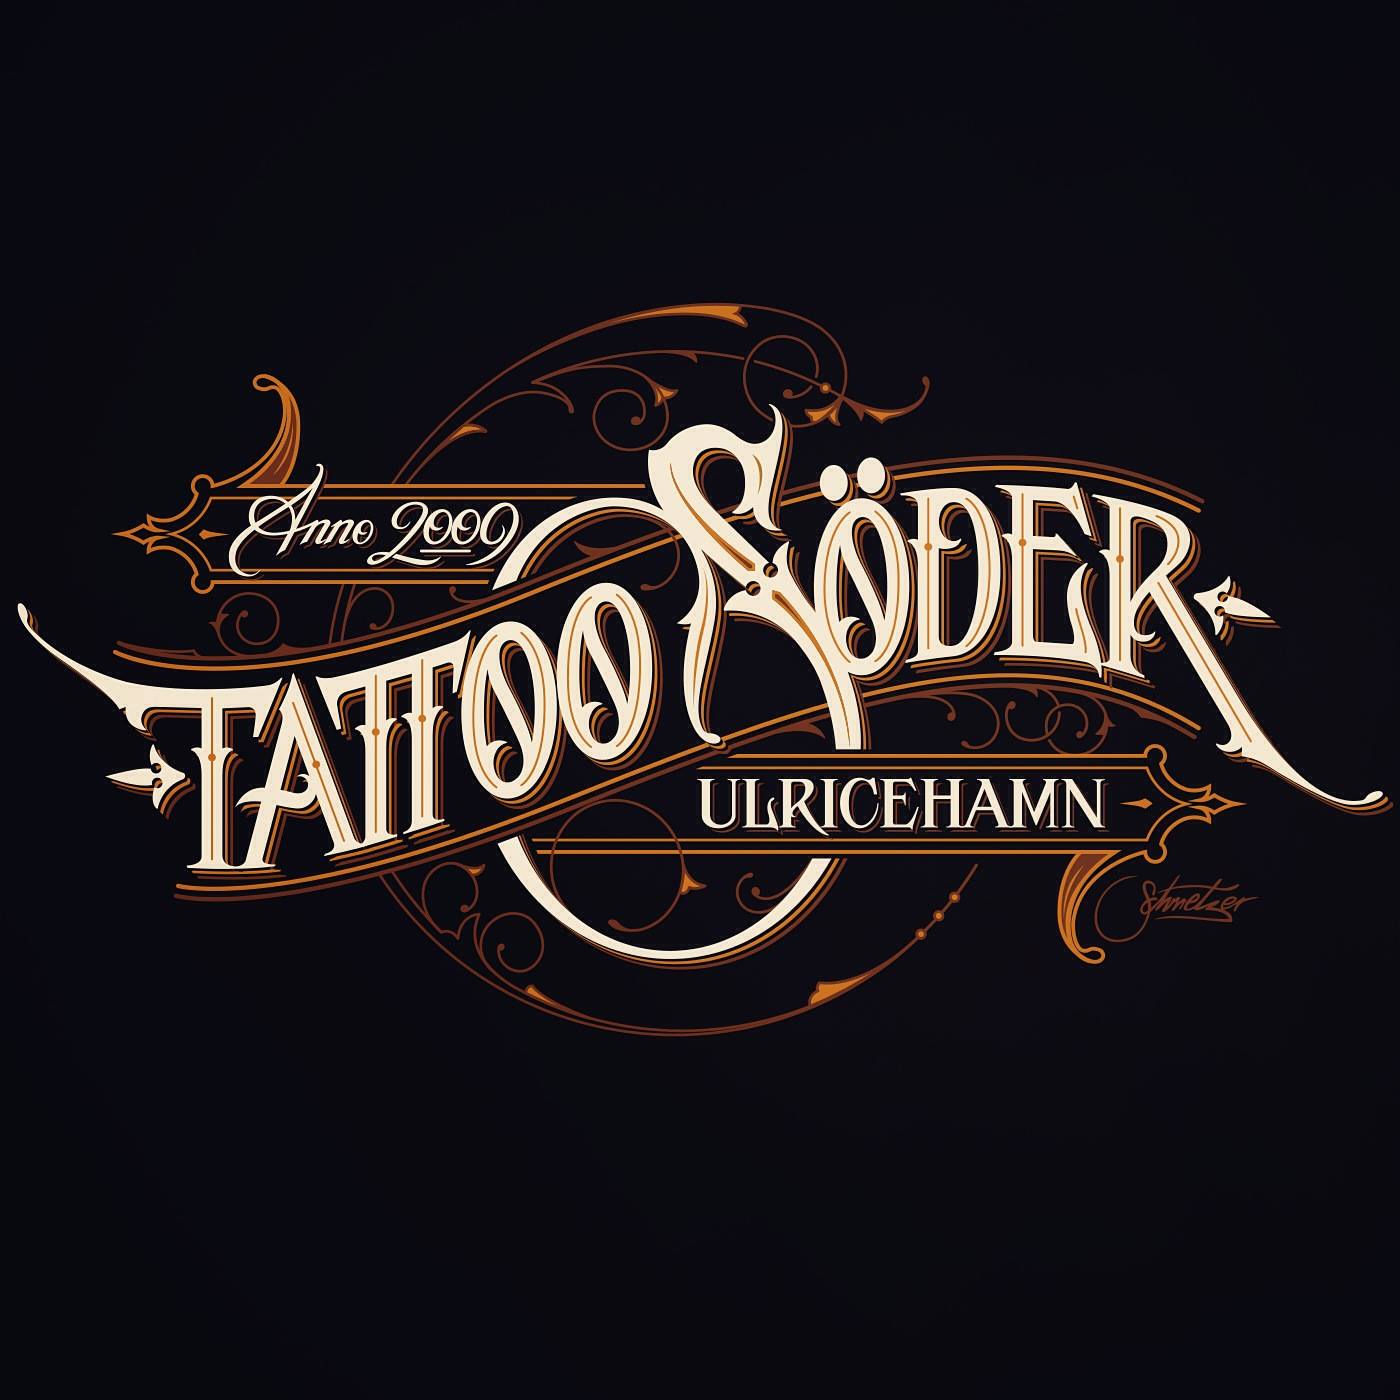 tattoo sodder typography